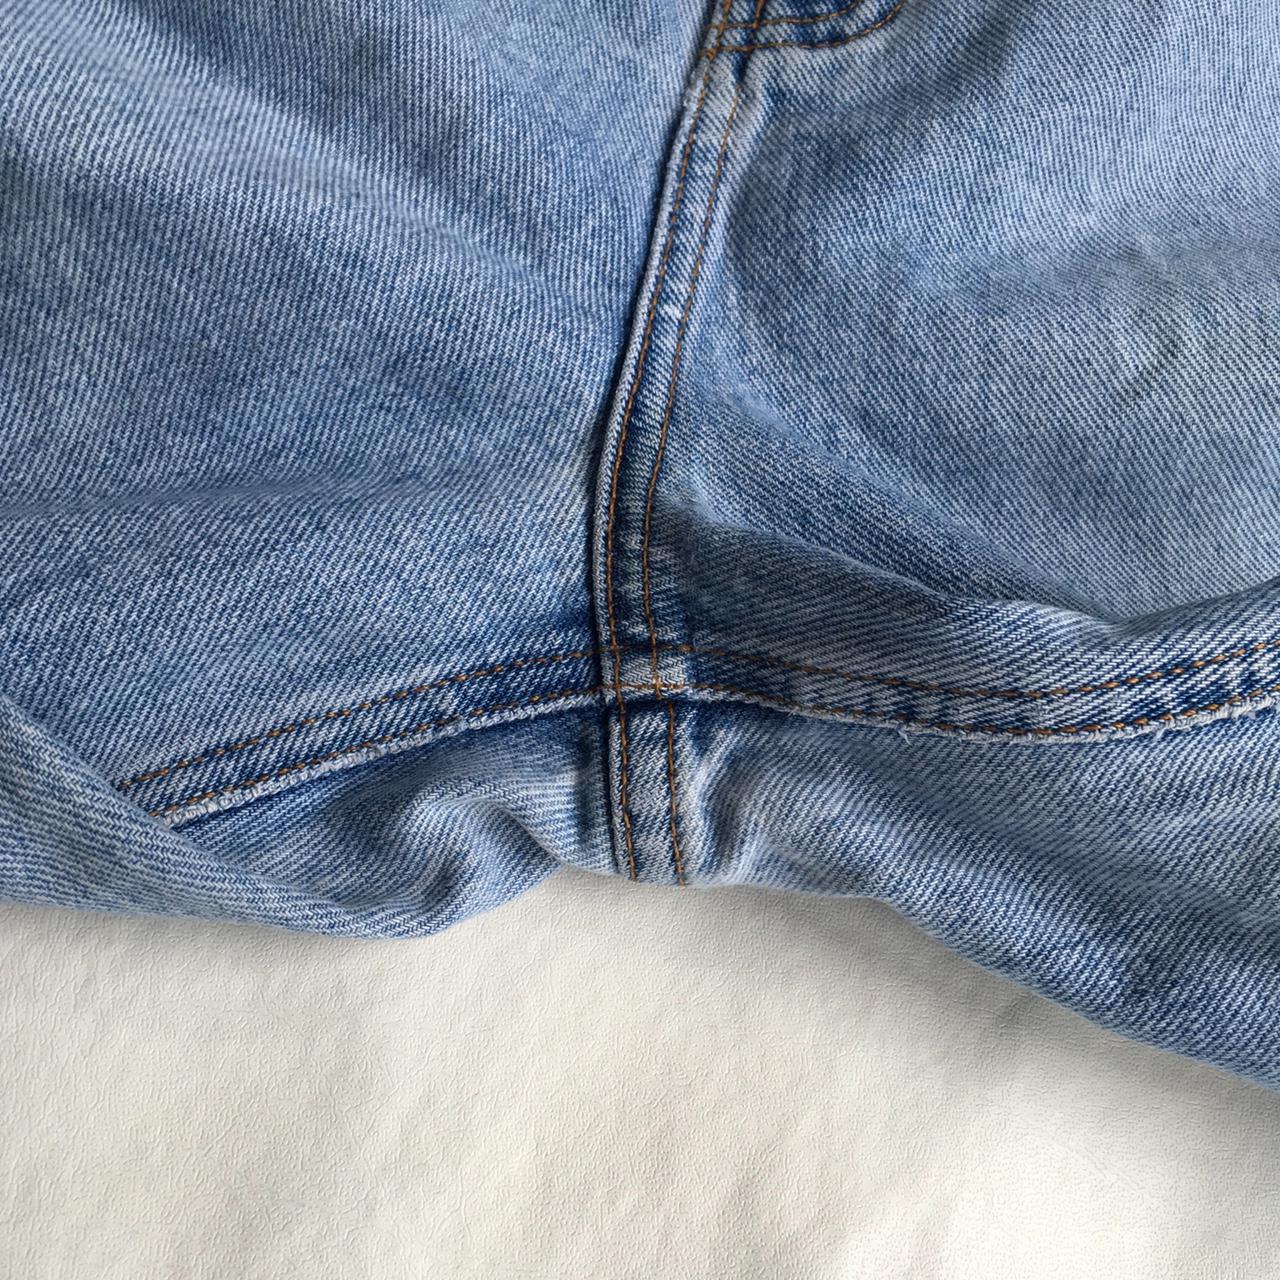 Product Image 3 - Vintage Calvin Klein jeans, light